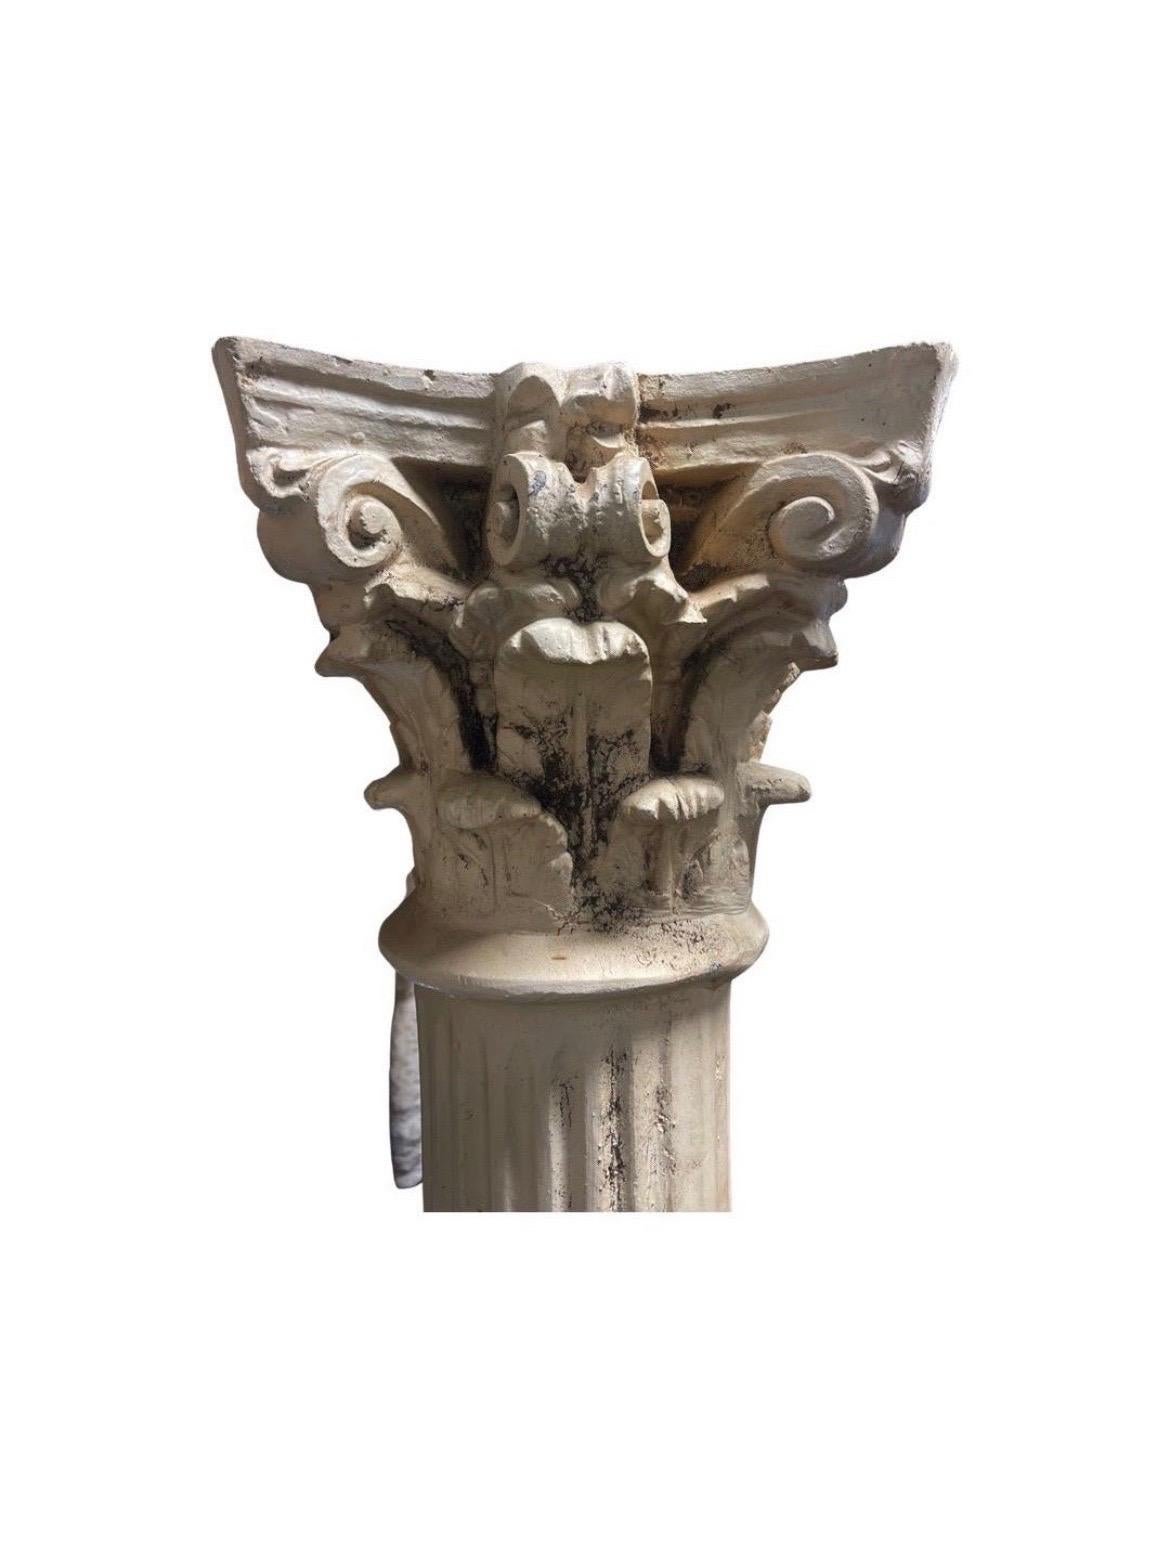 Pair Monumental Antique Cast Metal Corinthian Column Architectural Supports 8’+ 1